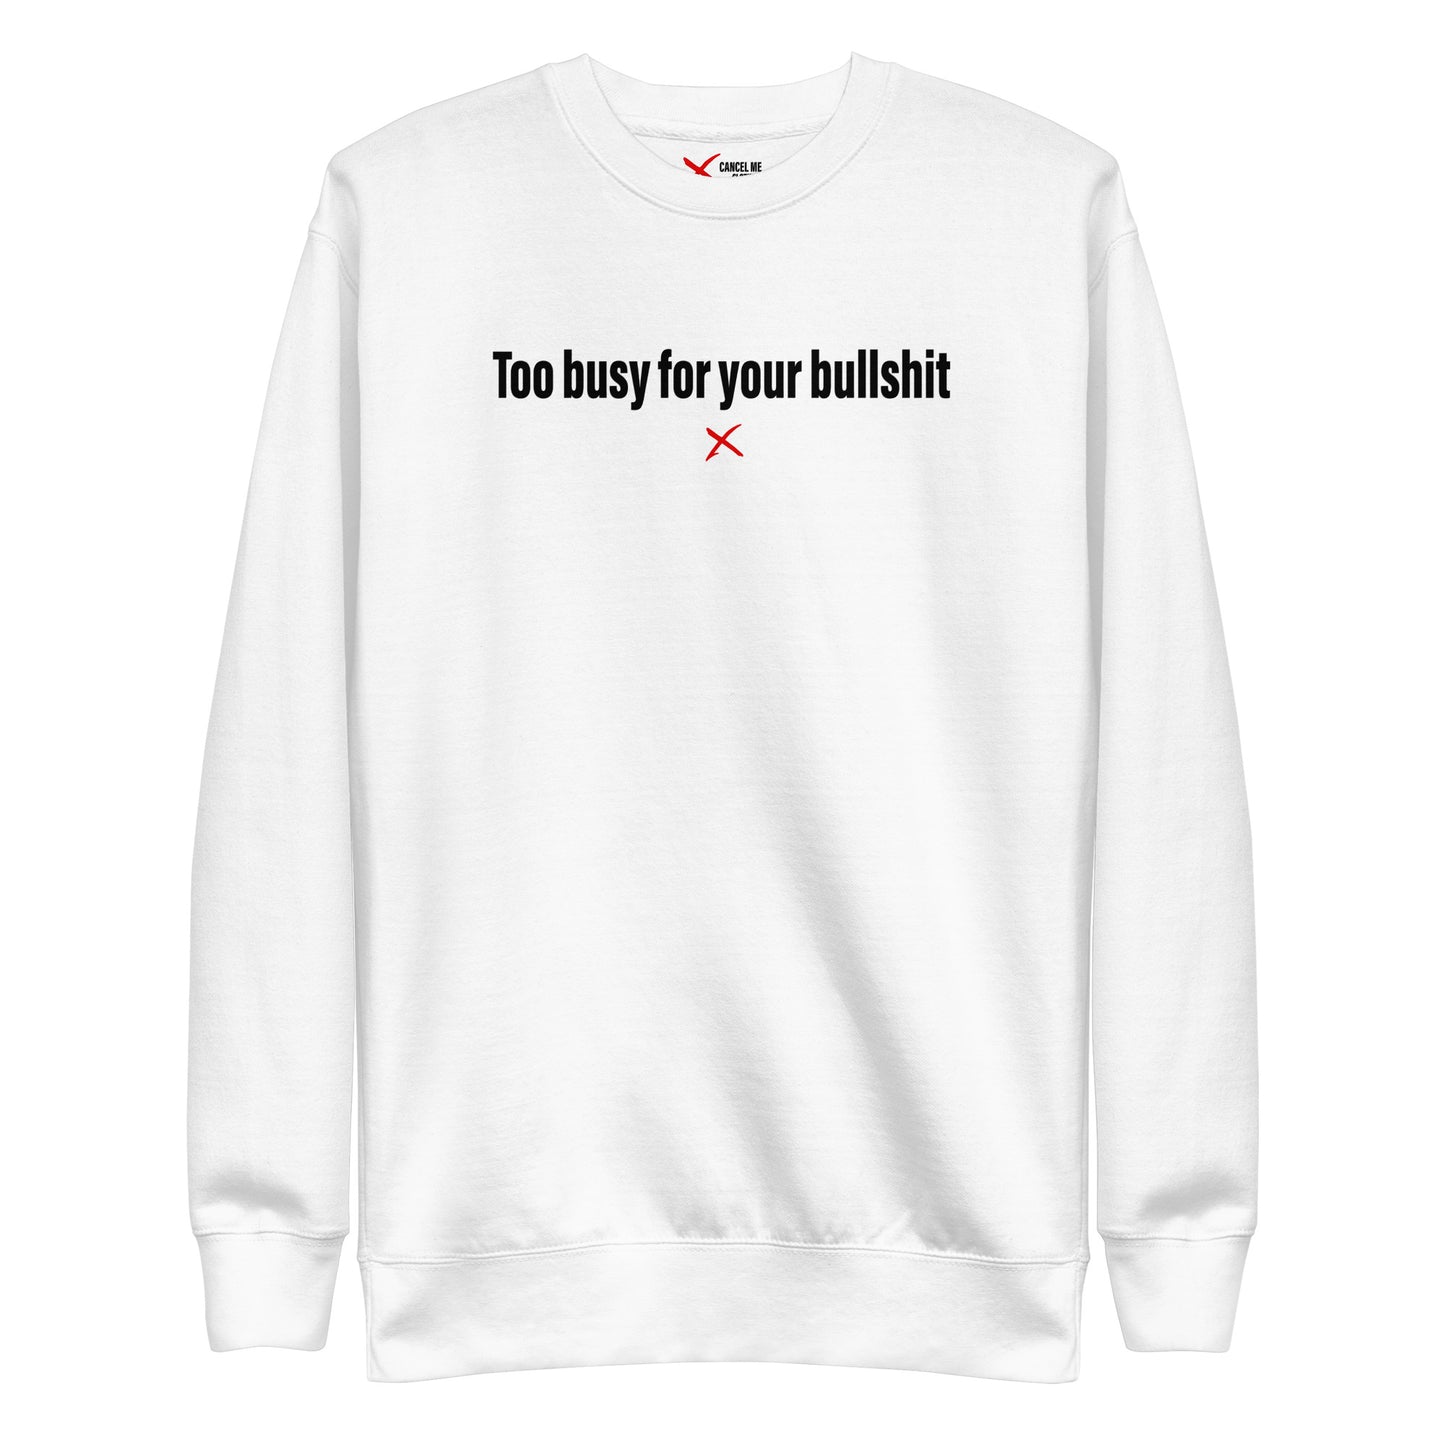 Too busy for your bullshit - Sweatshirt